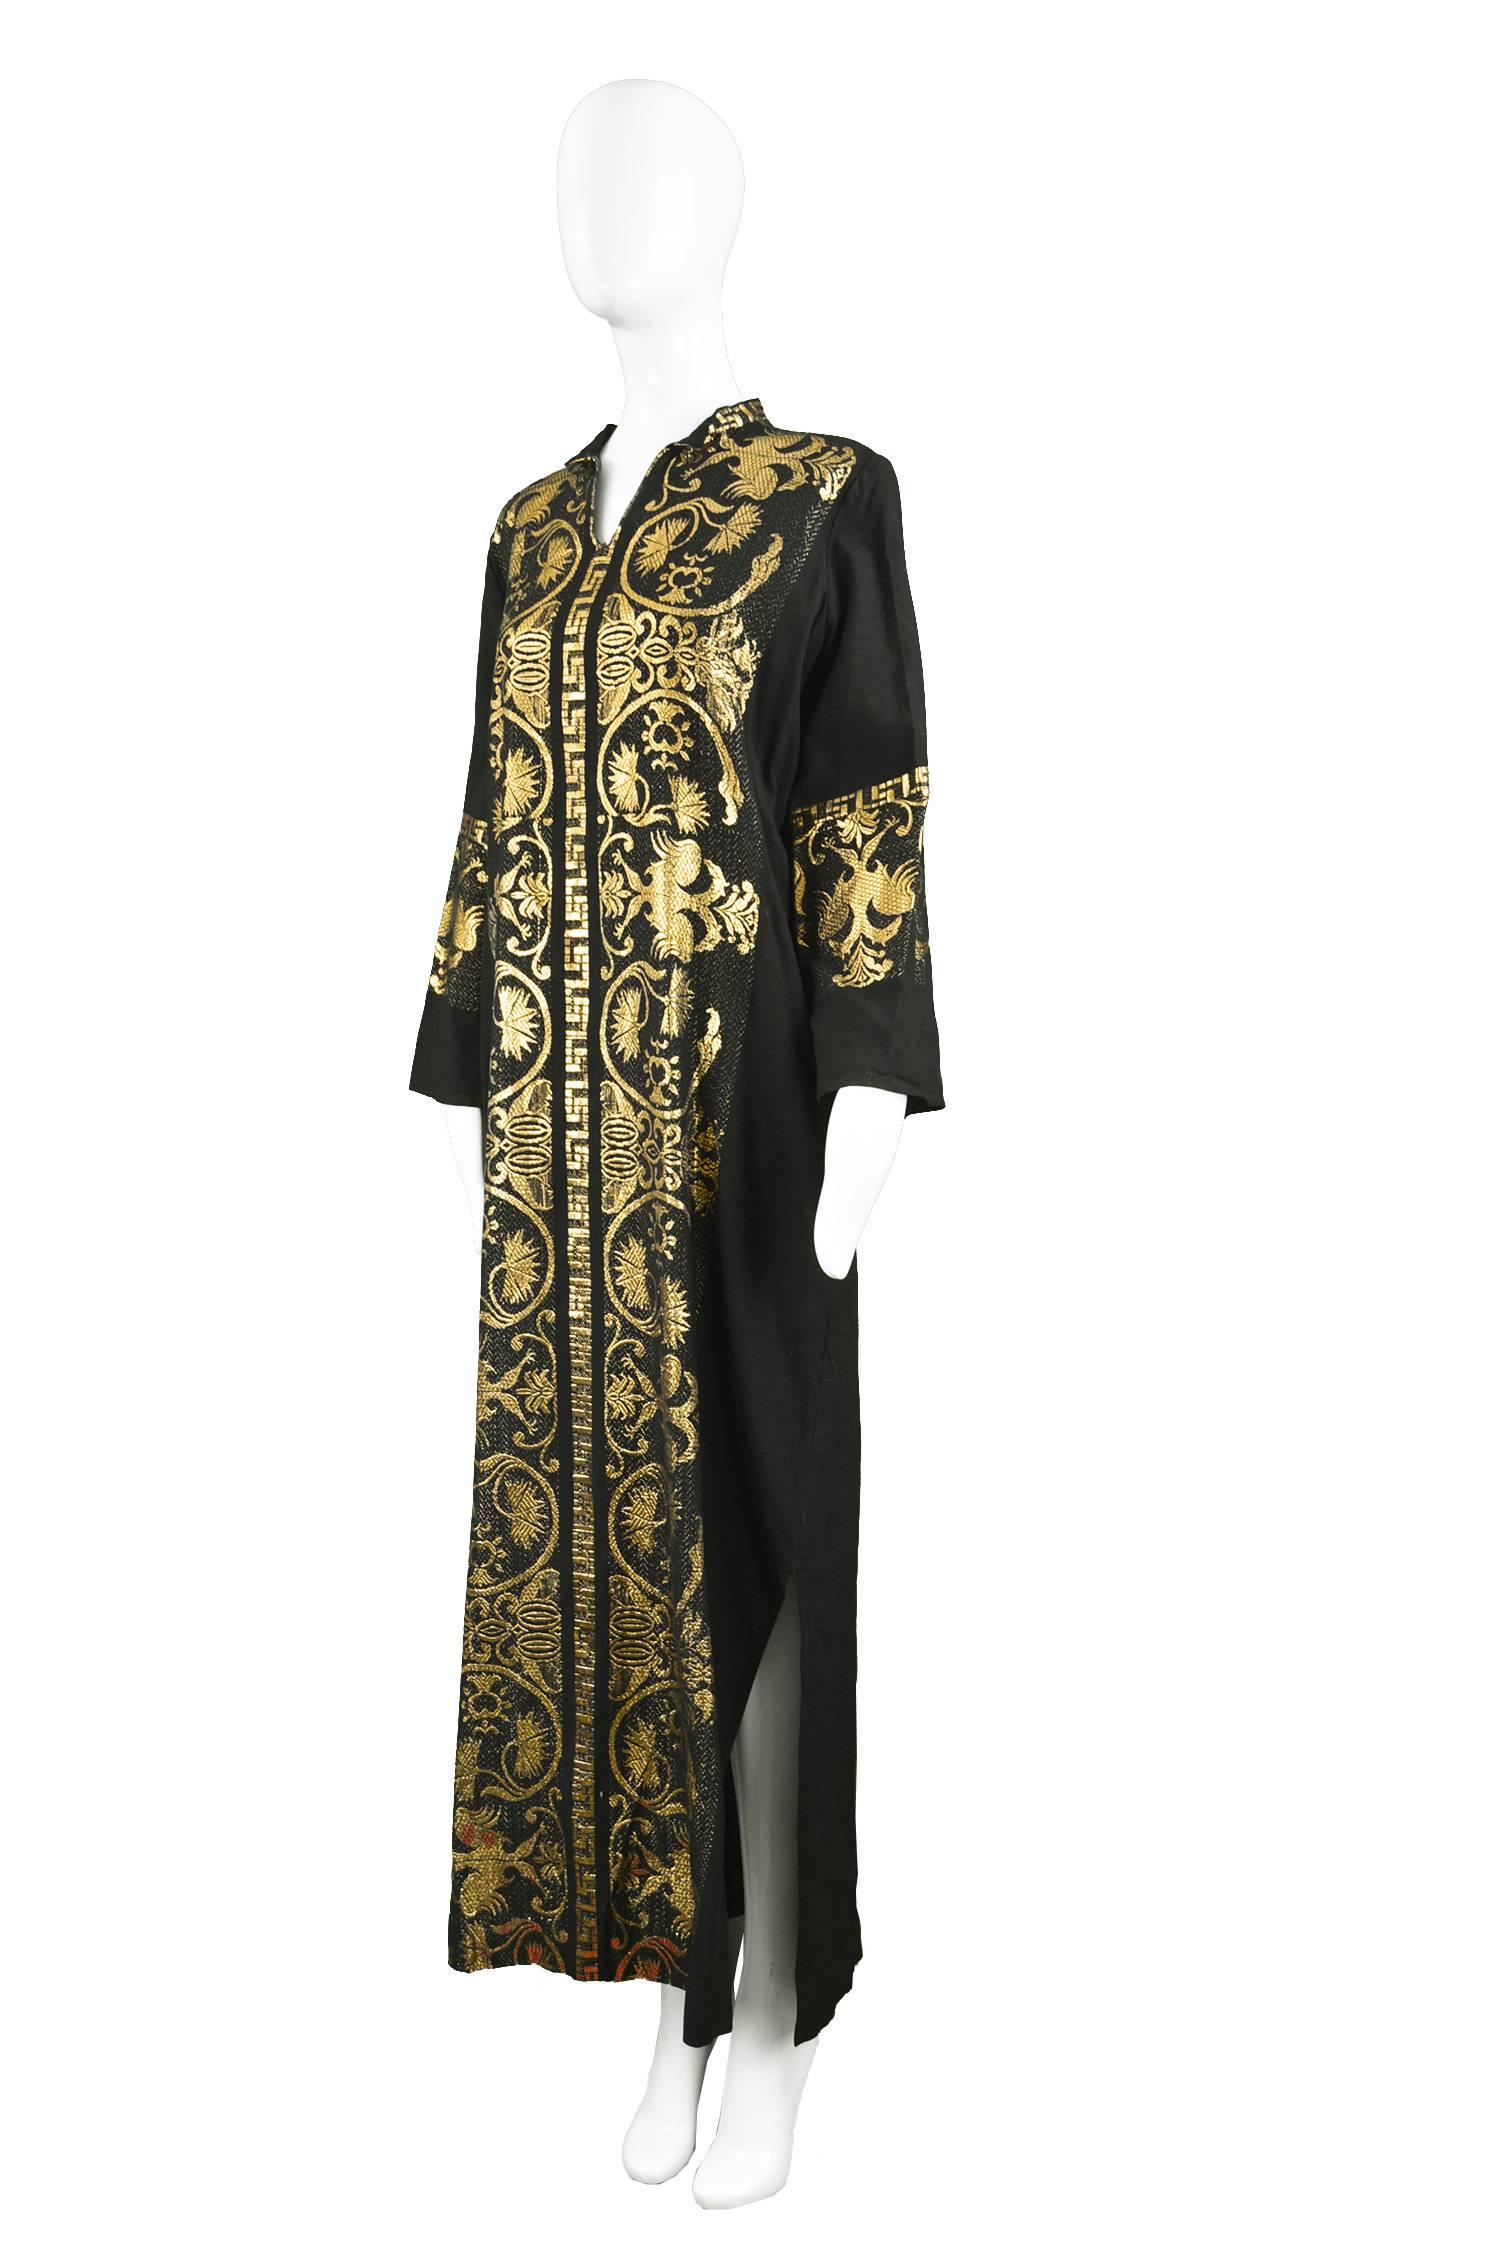 Vintage 1970s Black & Gold Lamé Embroidered Caftan Maxi Dress 1